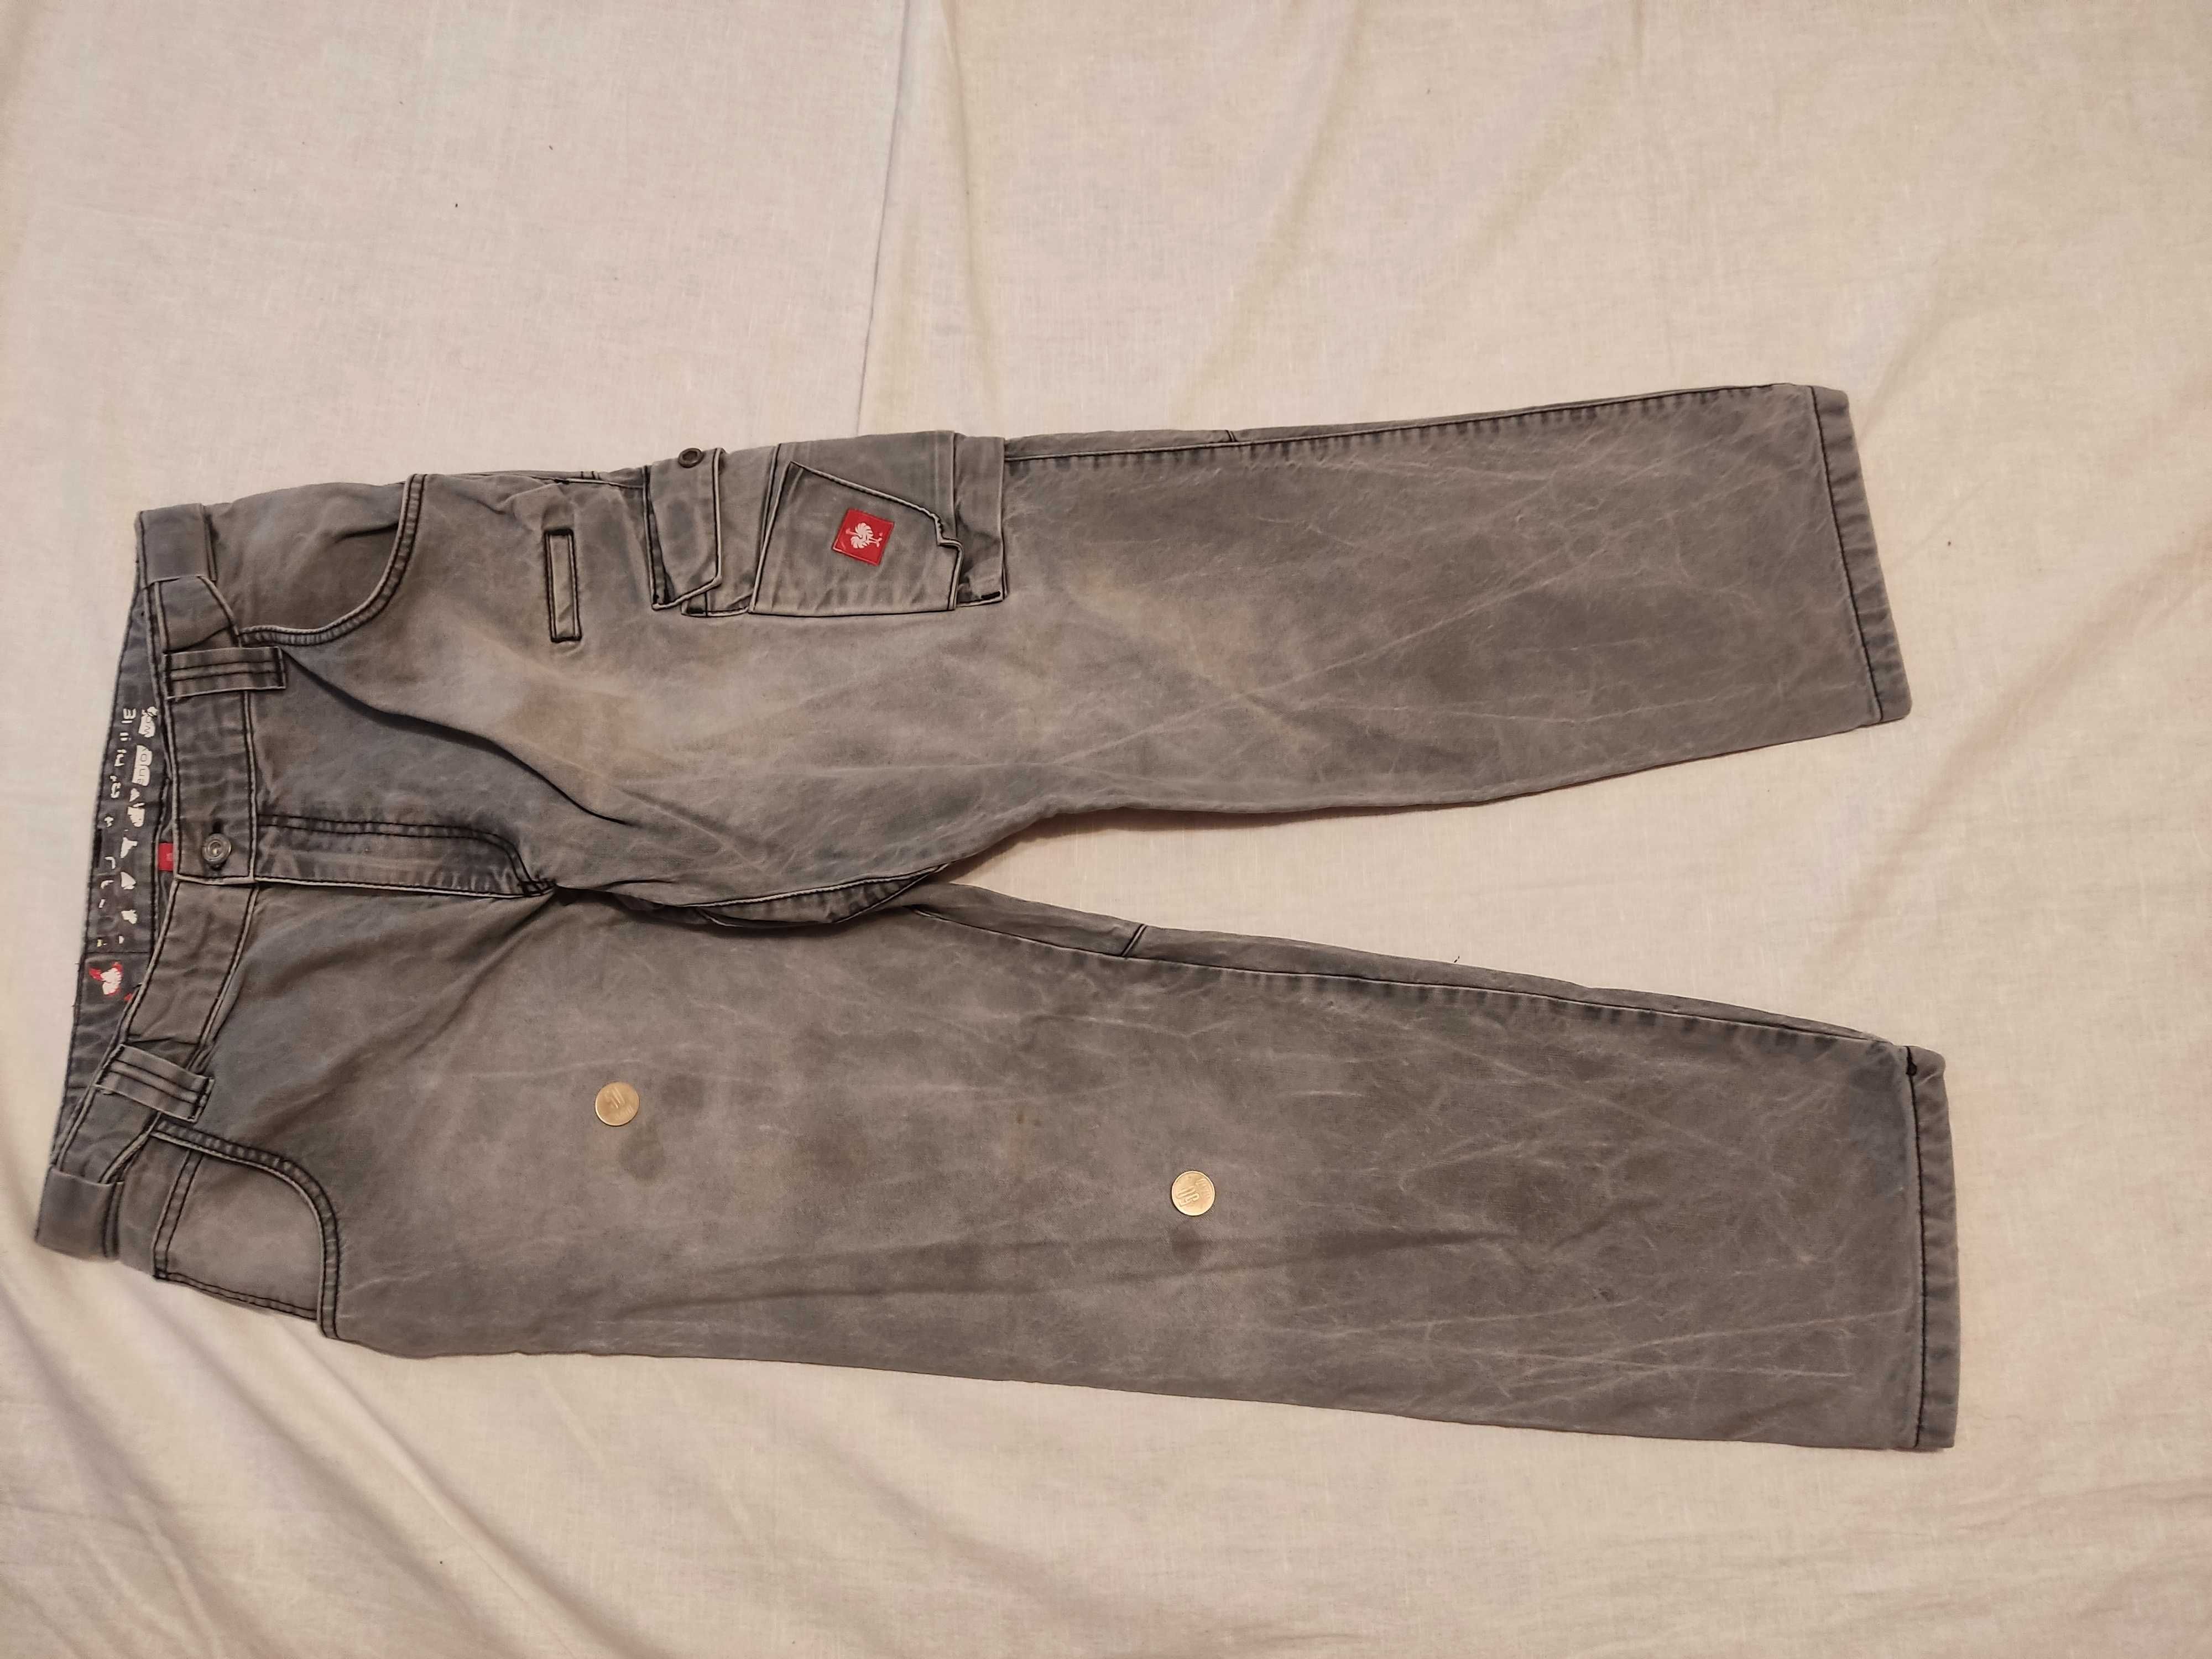 Pantaloni ENGELBERT STRAUSS blugi jeans 48cm talie salopeta munca